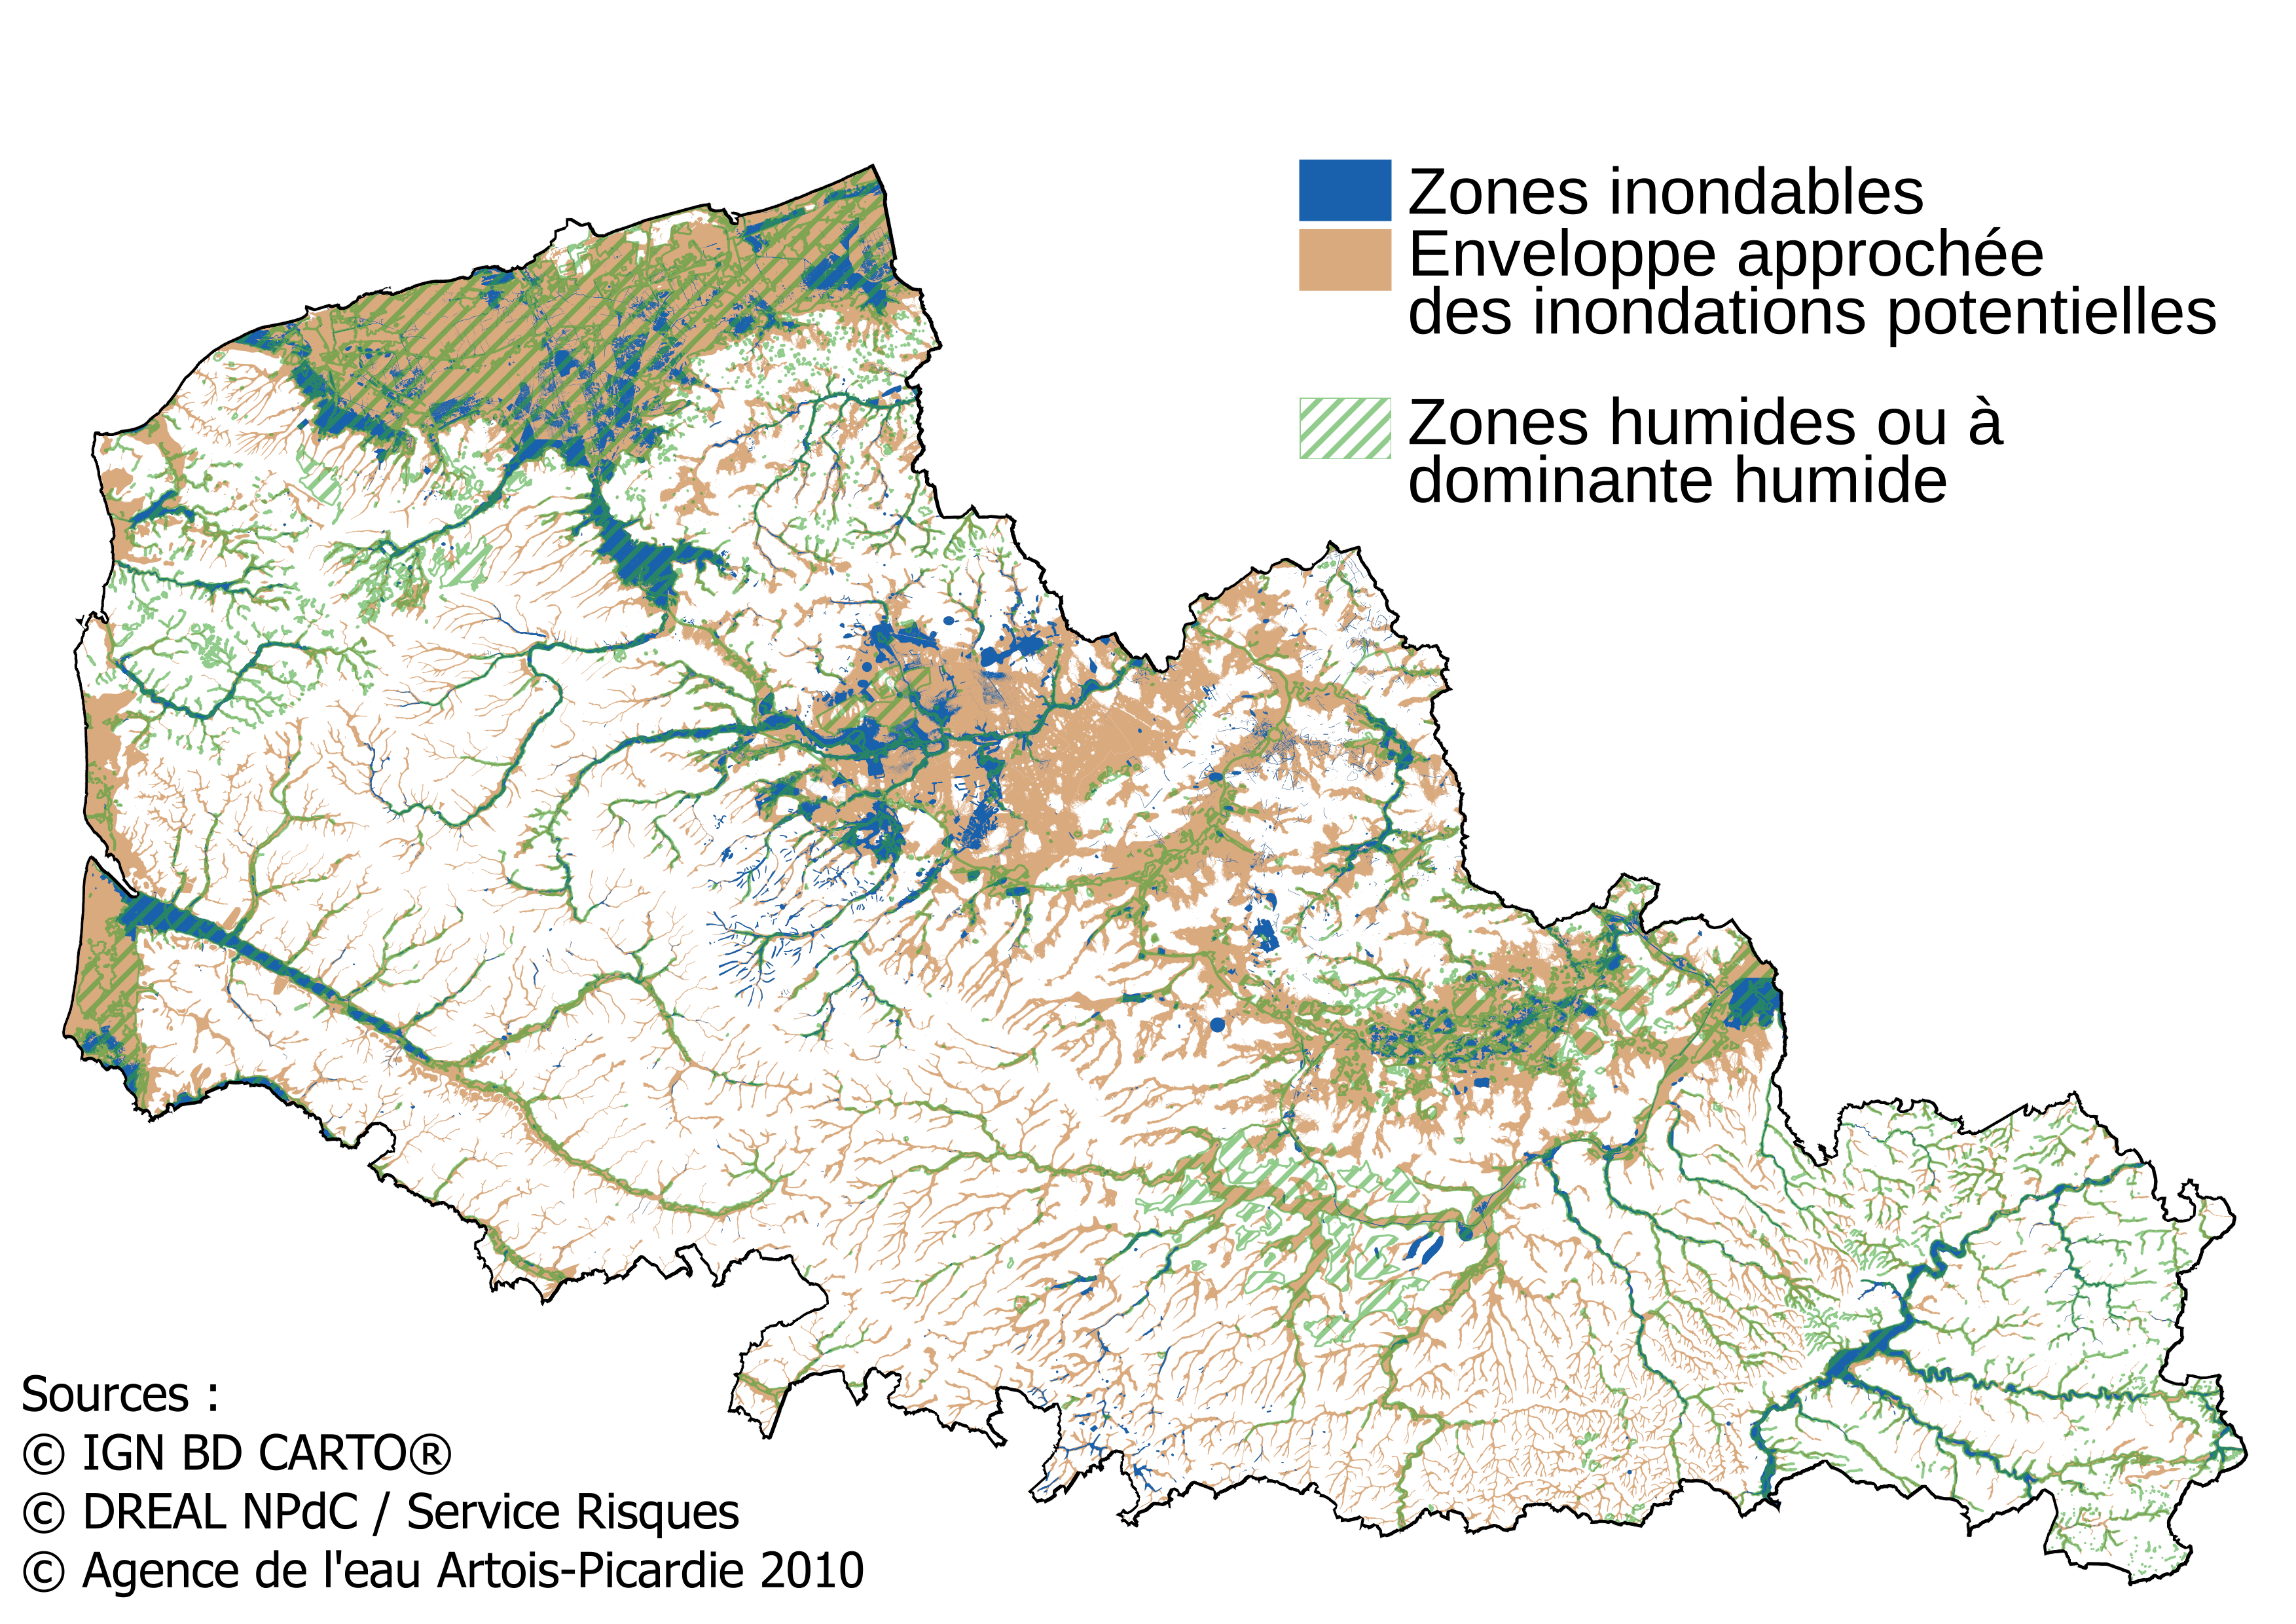 2. Zones inondables et zones humides